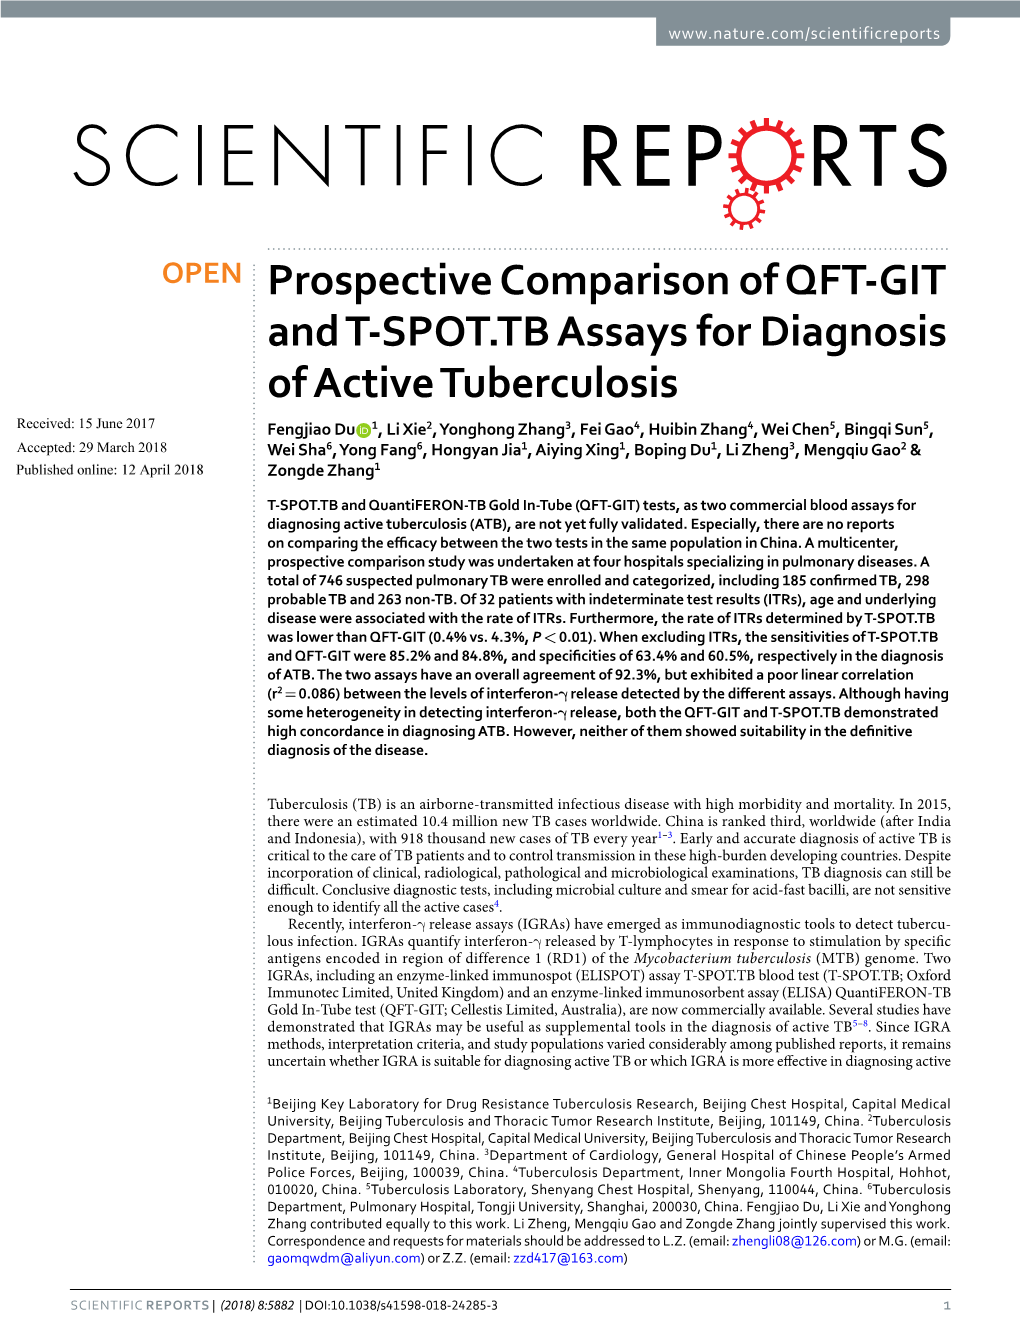 Prospective Comparison of QFT-GIT and T-SPOT.TB Assays For